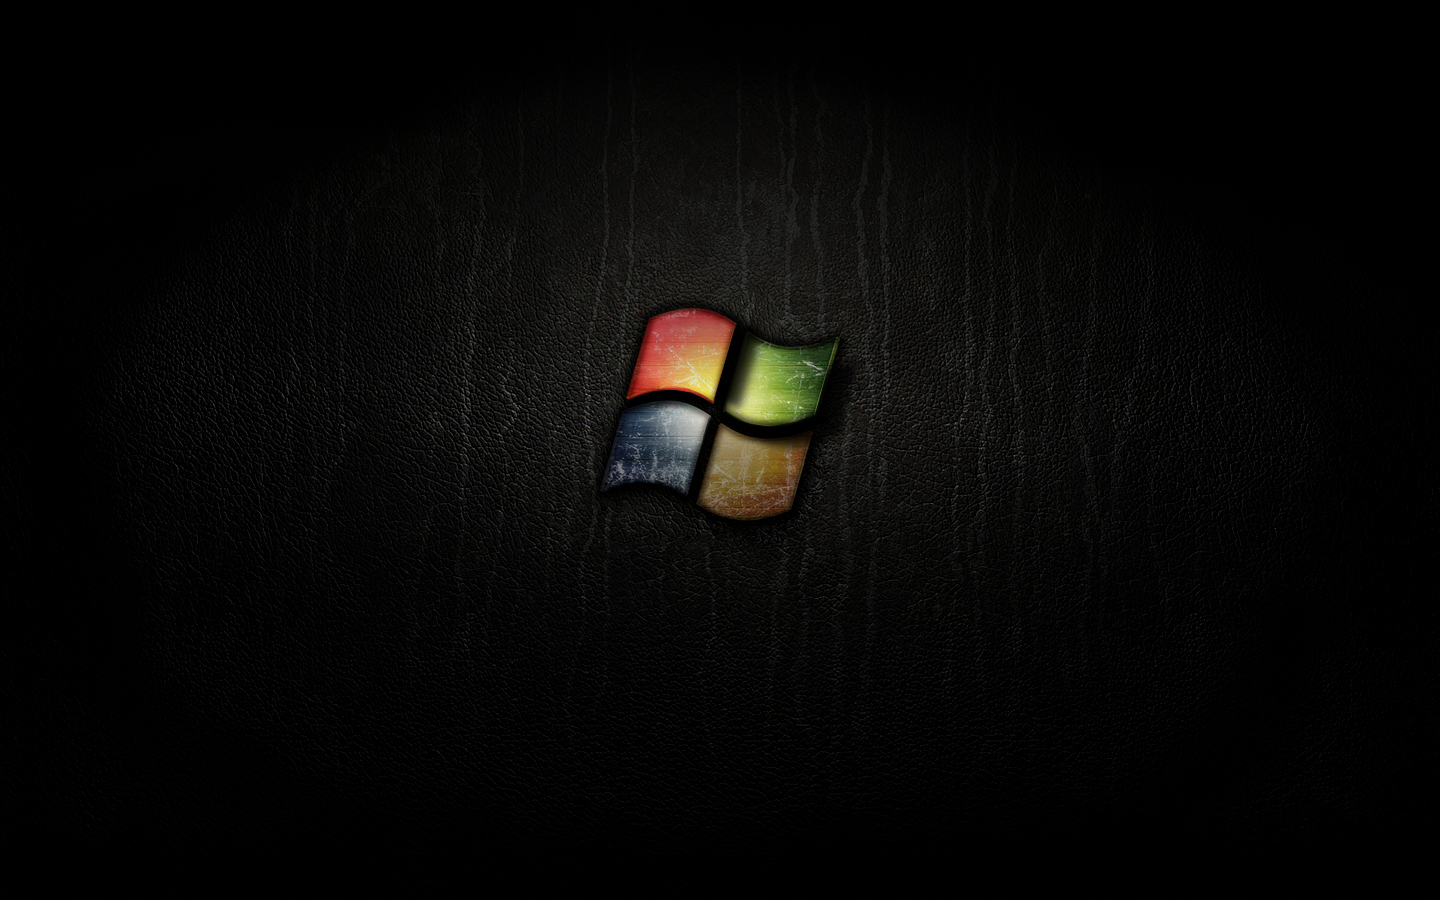 Black Windows 7 Wallpaper HD 82 images